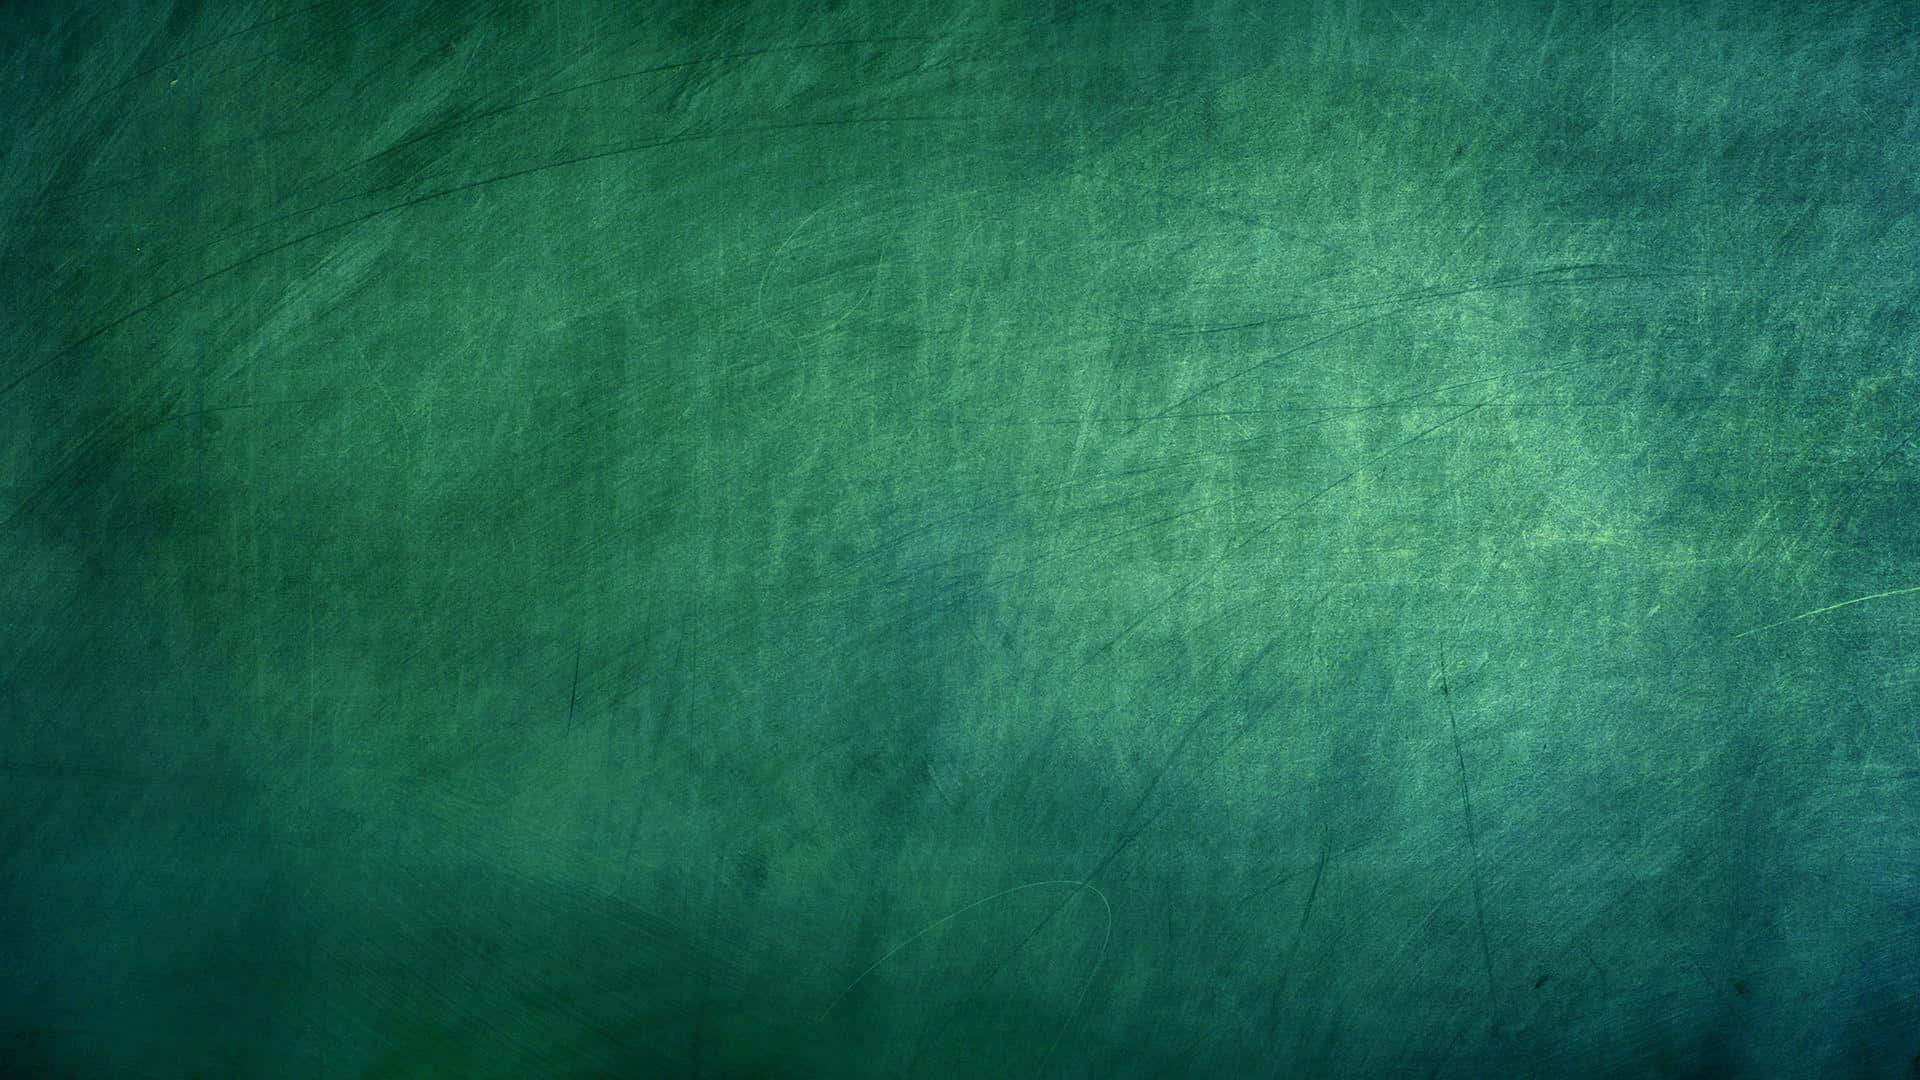 green chalkboard texture